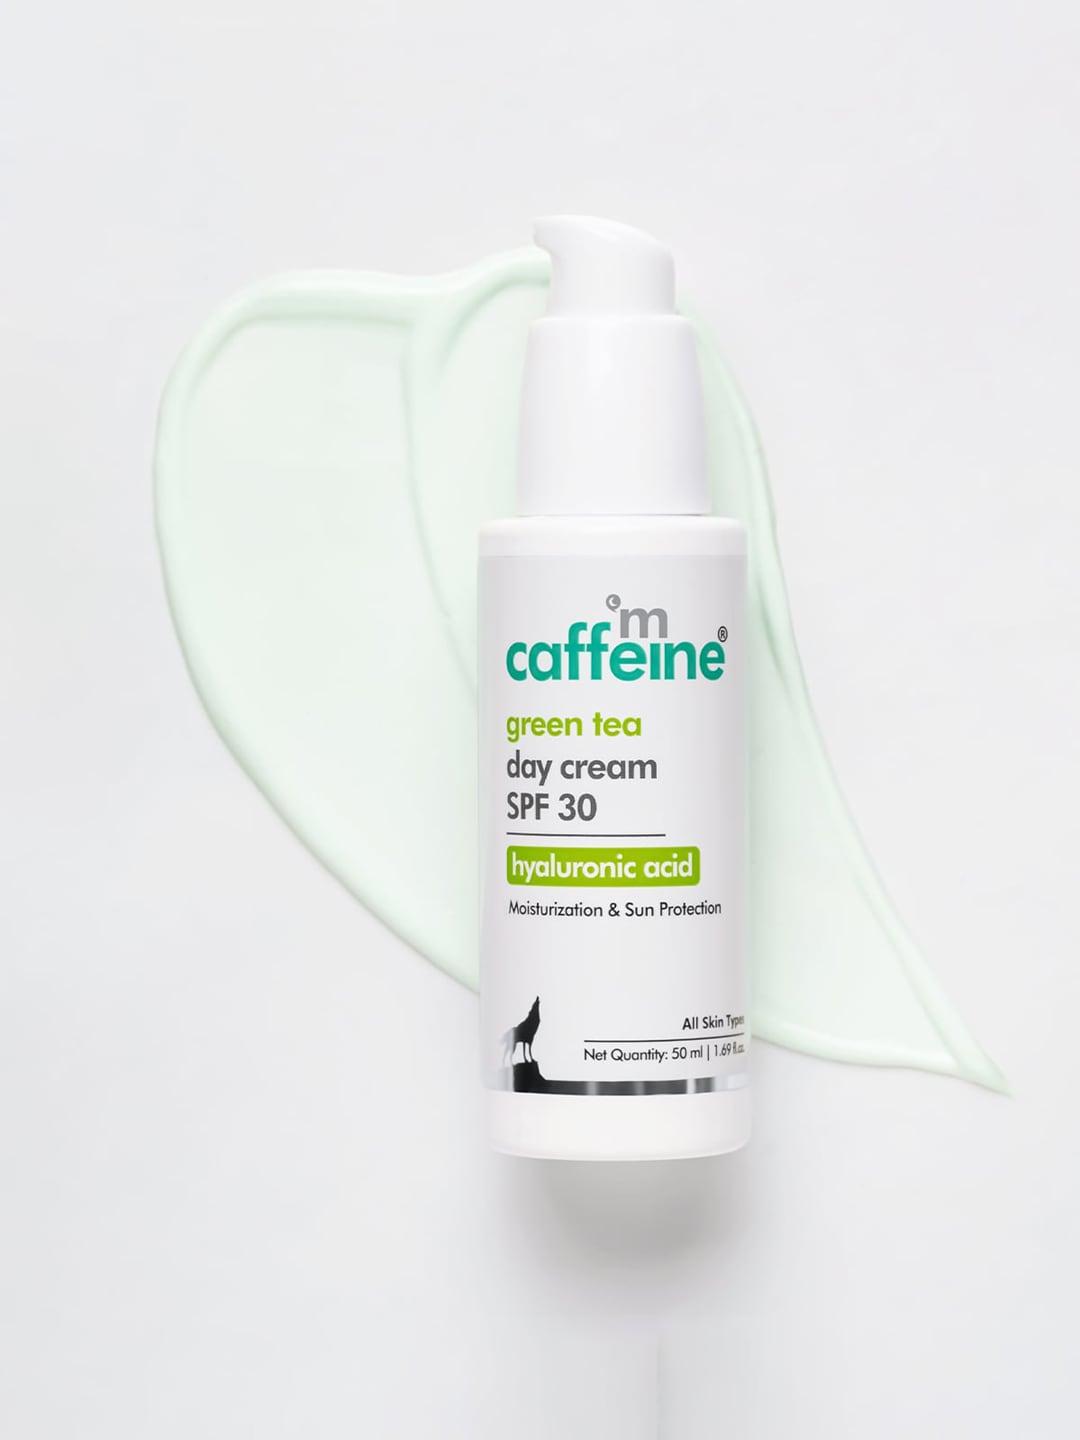 mcaffeine green tea day cream spf 30 with hyaluronic acid 50 ml